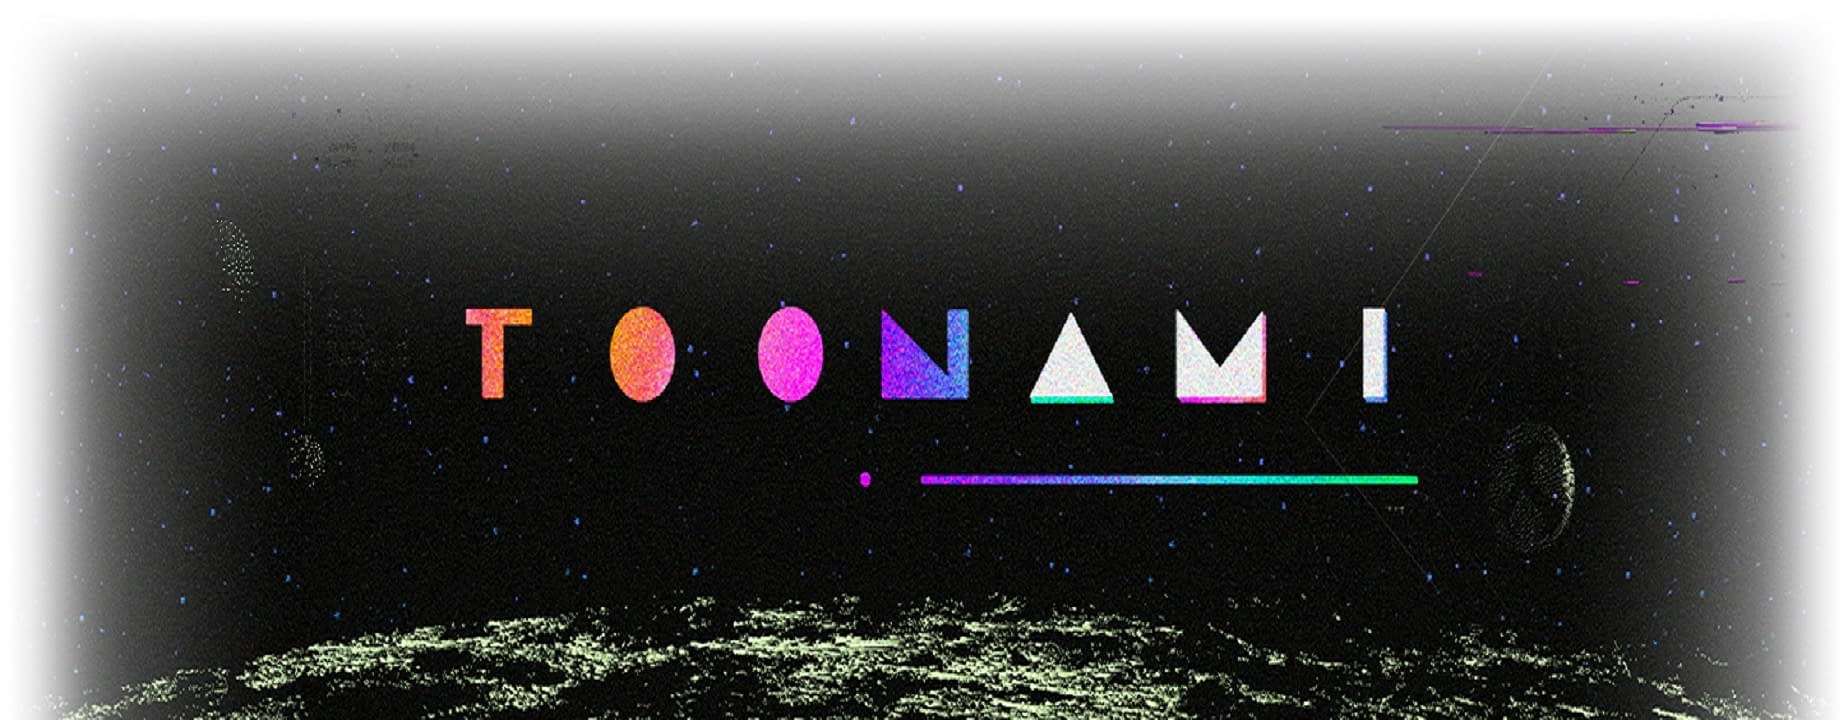 Toonami: False Submission Ends Adult Swim Anime Block's On-Air Fan Art